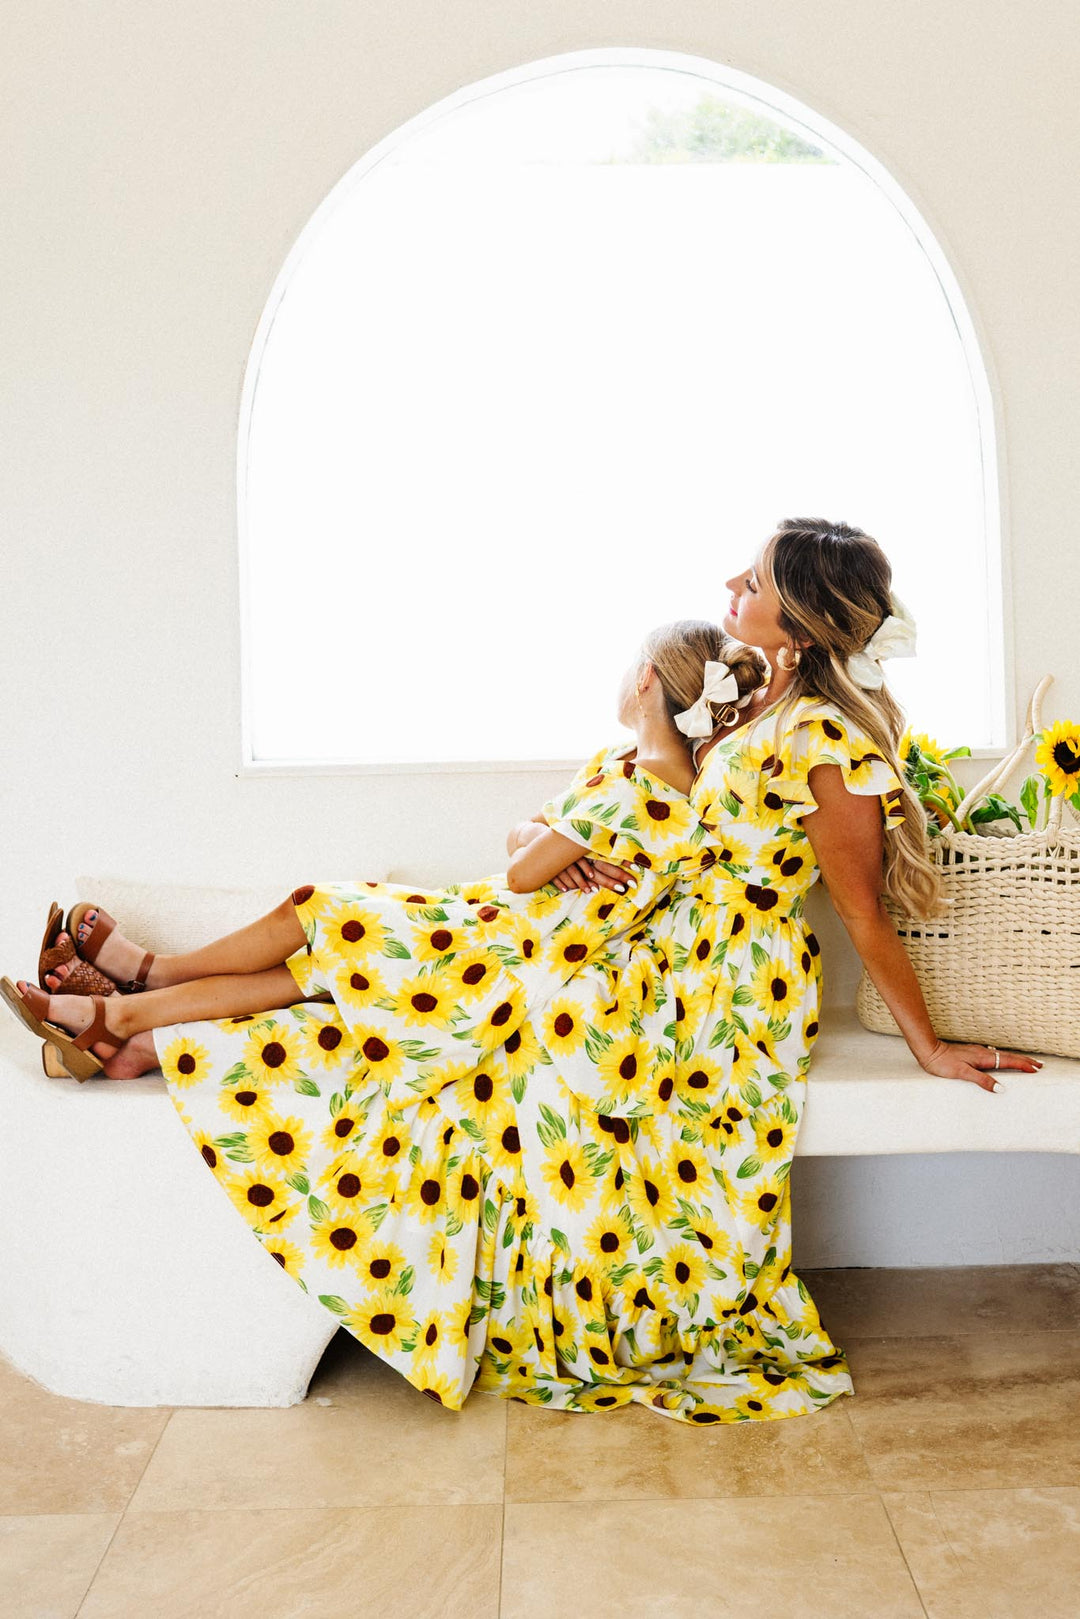 Trixie Dress in Sunflower